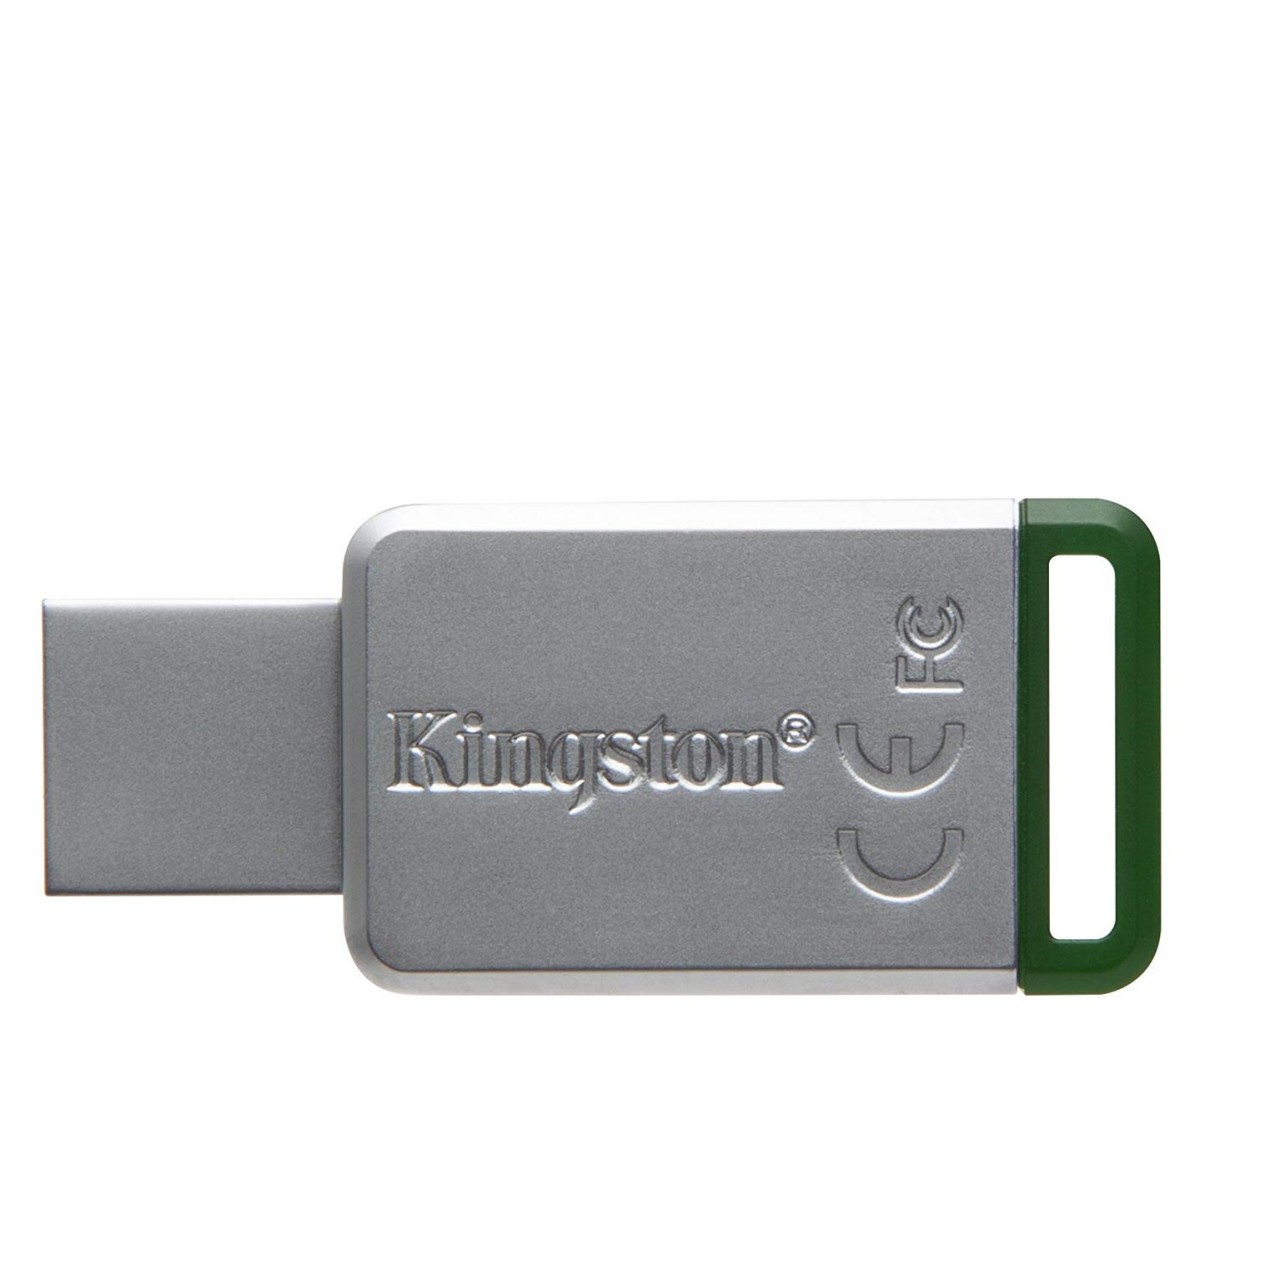 Kingston Data Traveler DT50 Flash Drive - 16 GB - 3.0